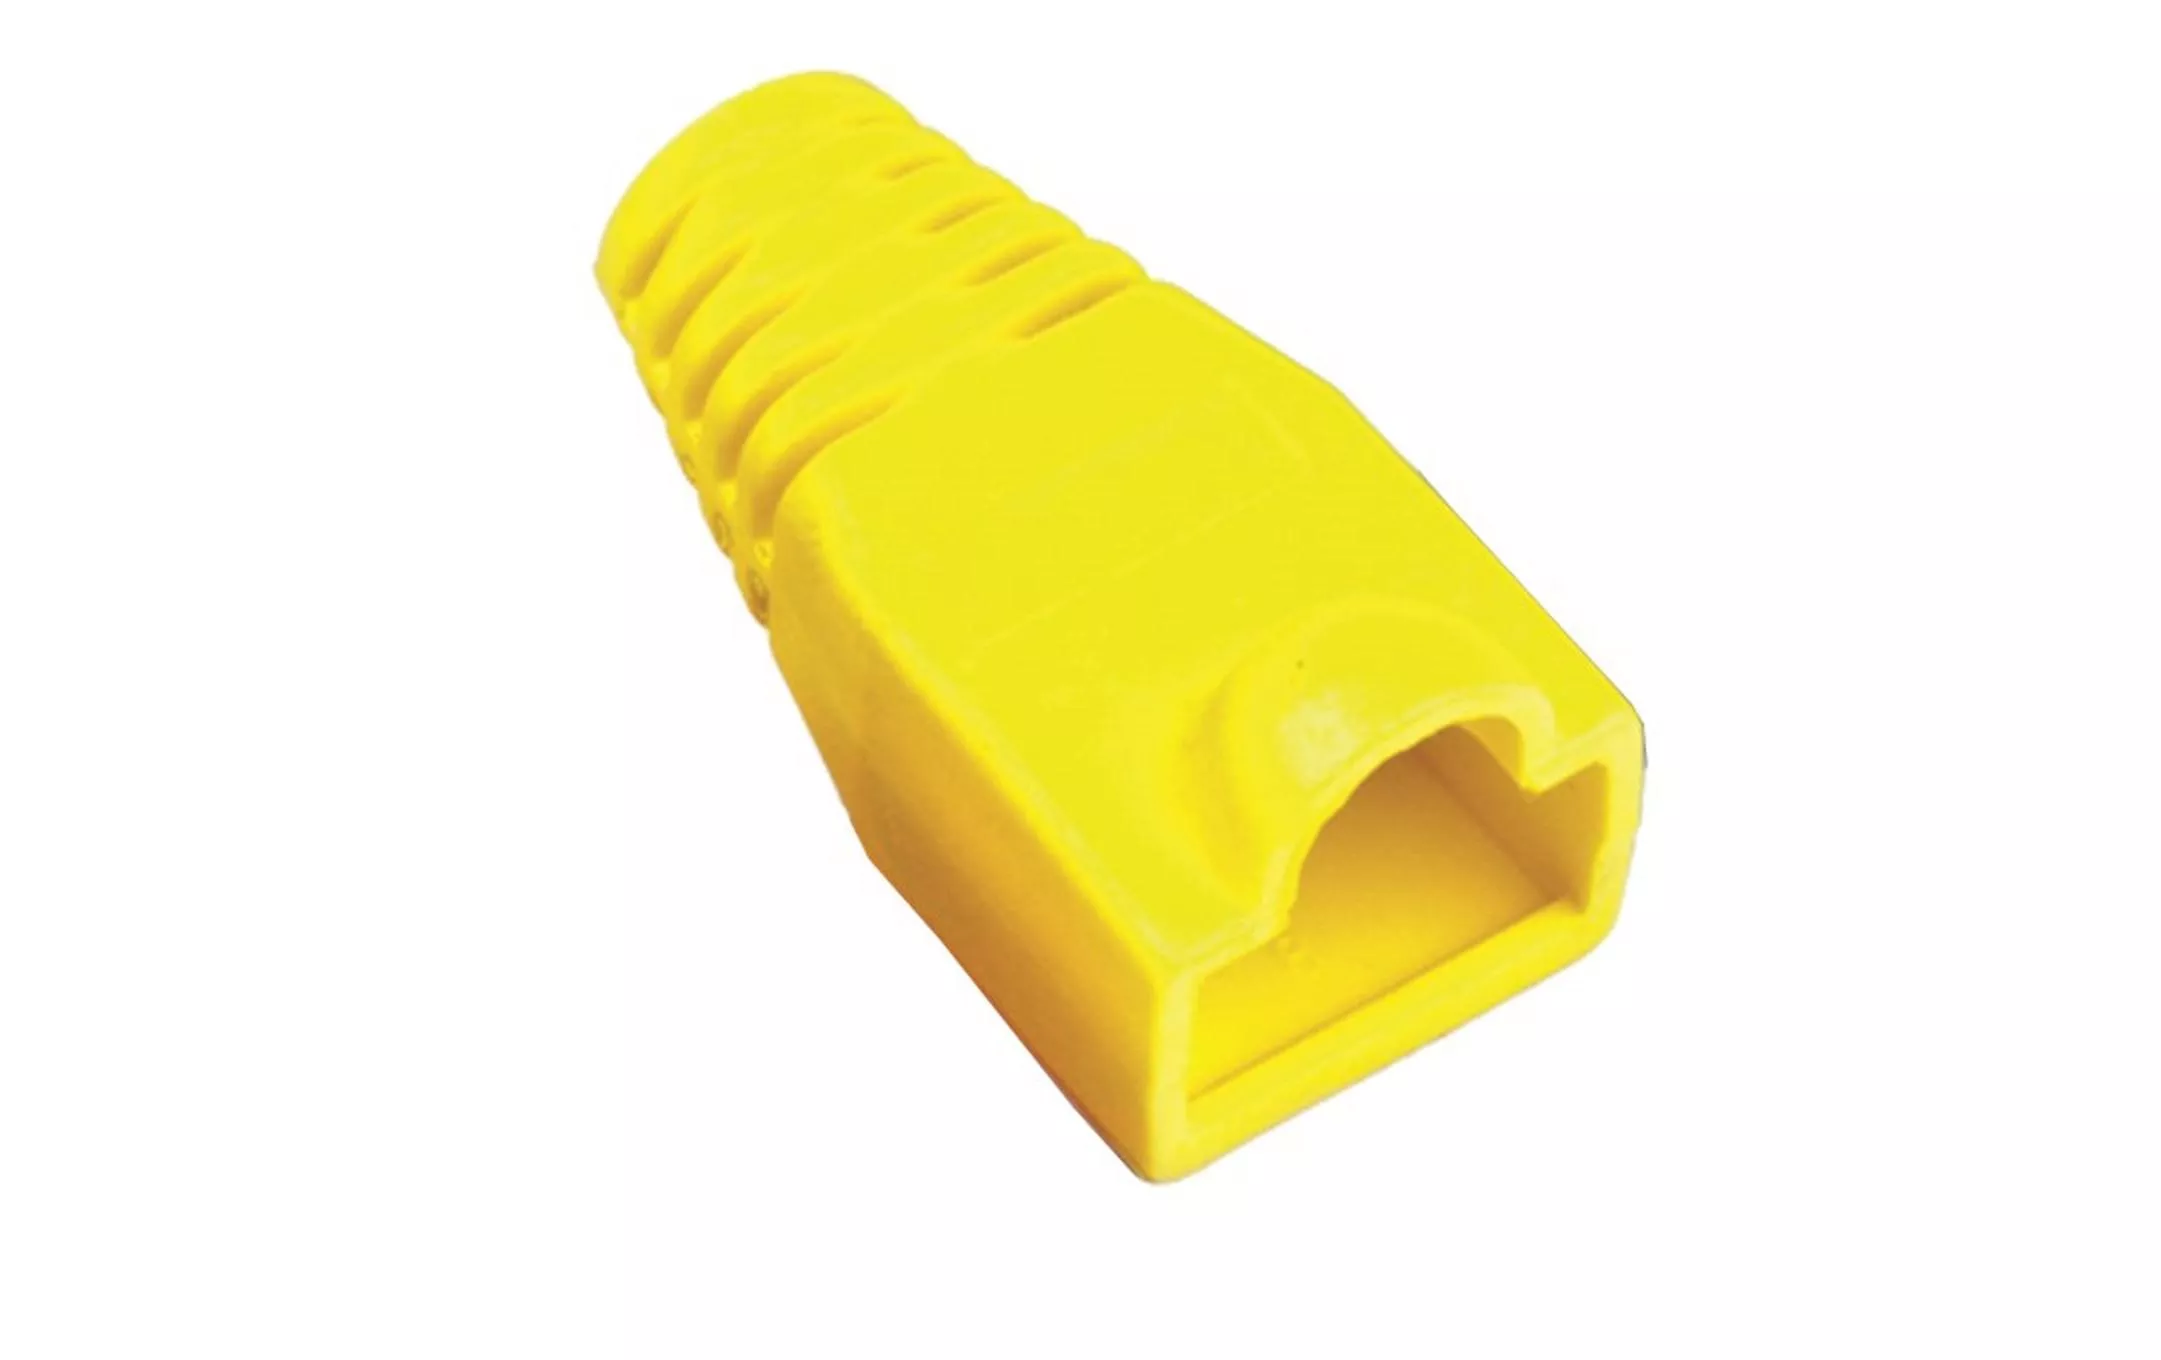 Cable Bend Relief RJ-45 giallo, 100 pezzi.